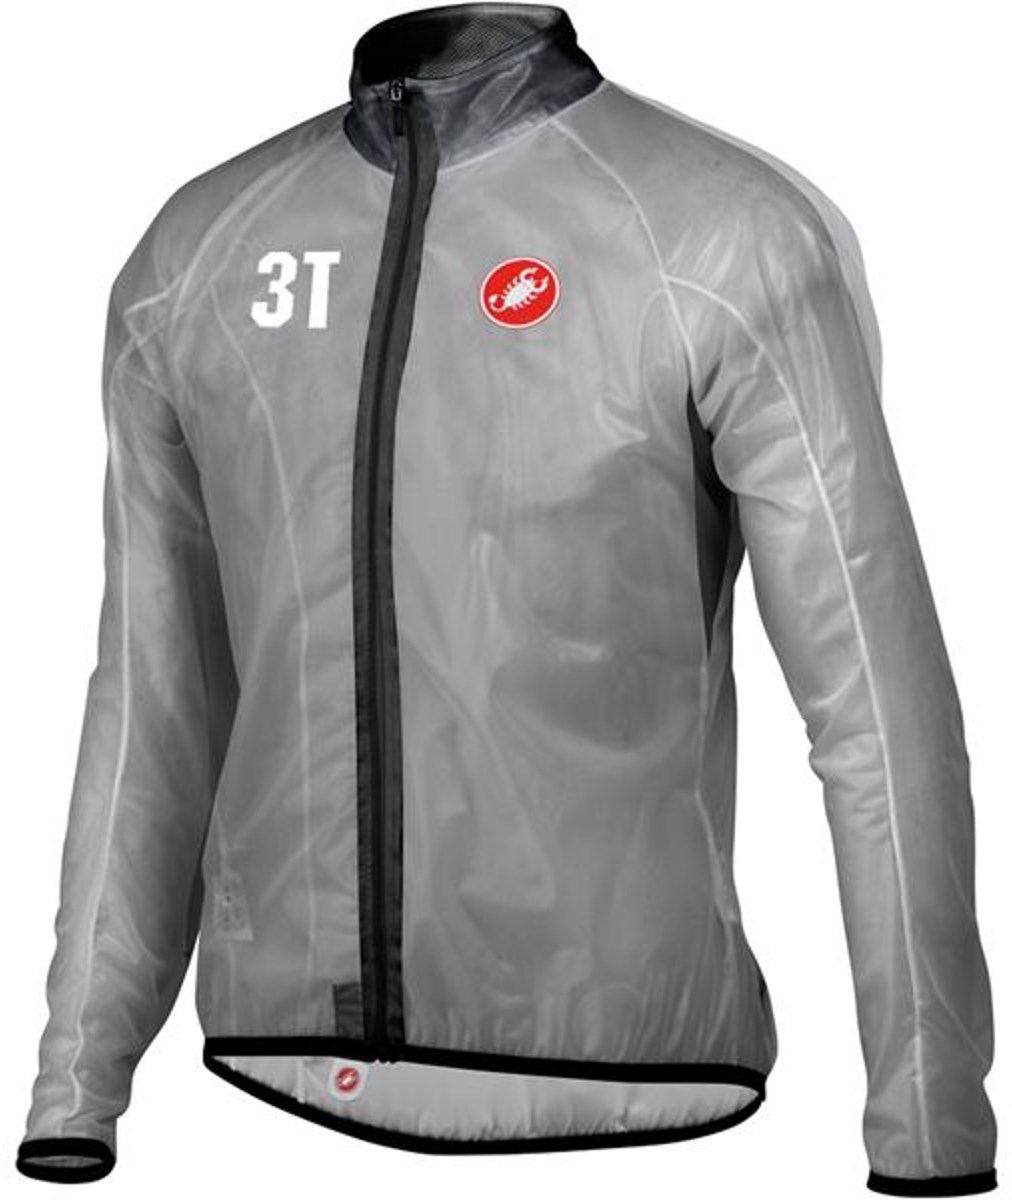 Castelli 3T Sottile Transparent Cycling Jacket product image